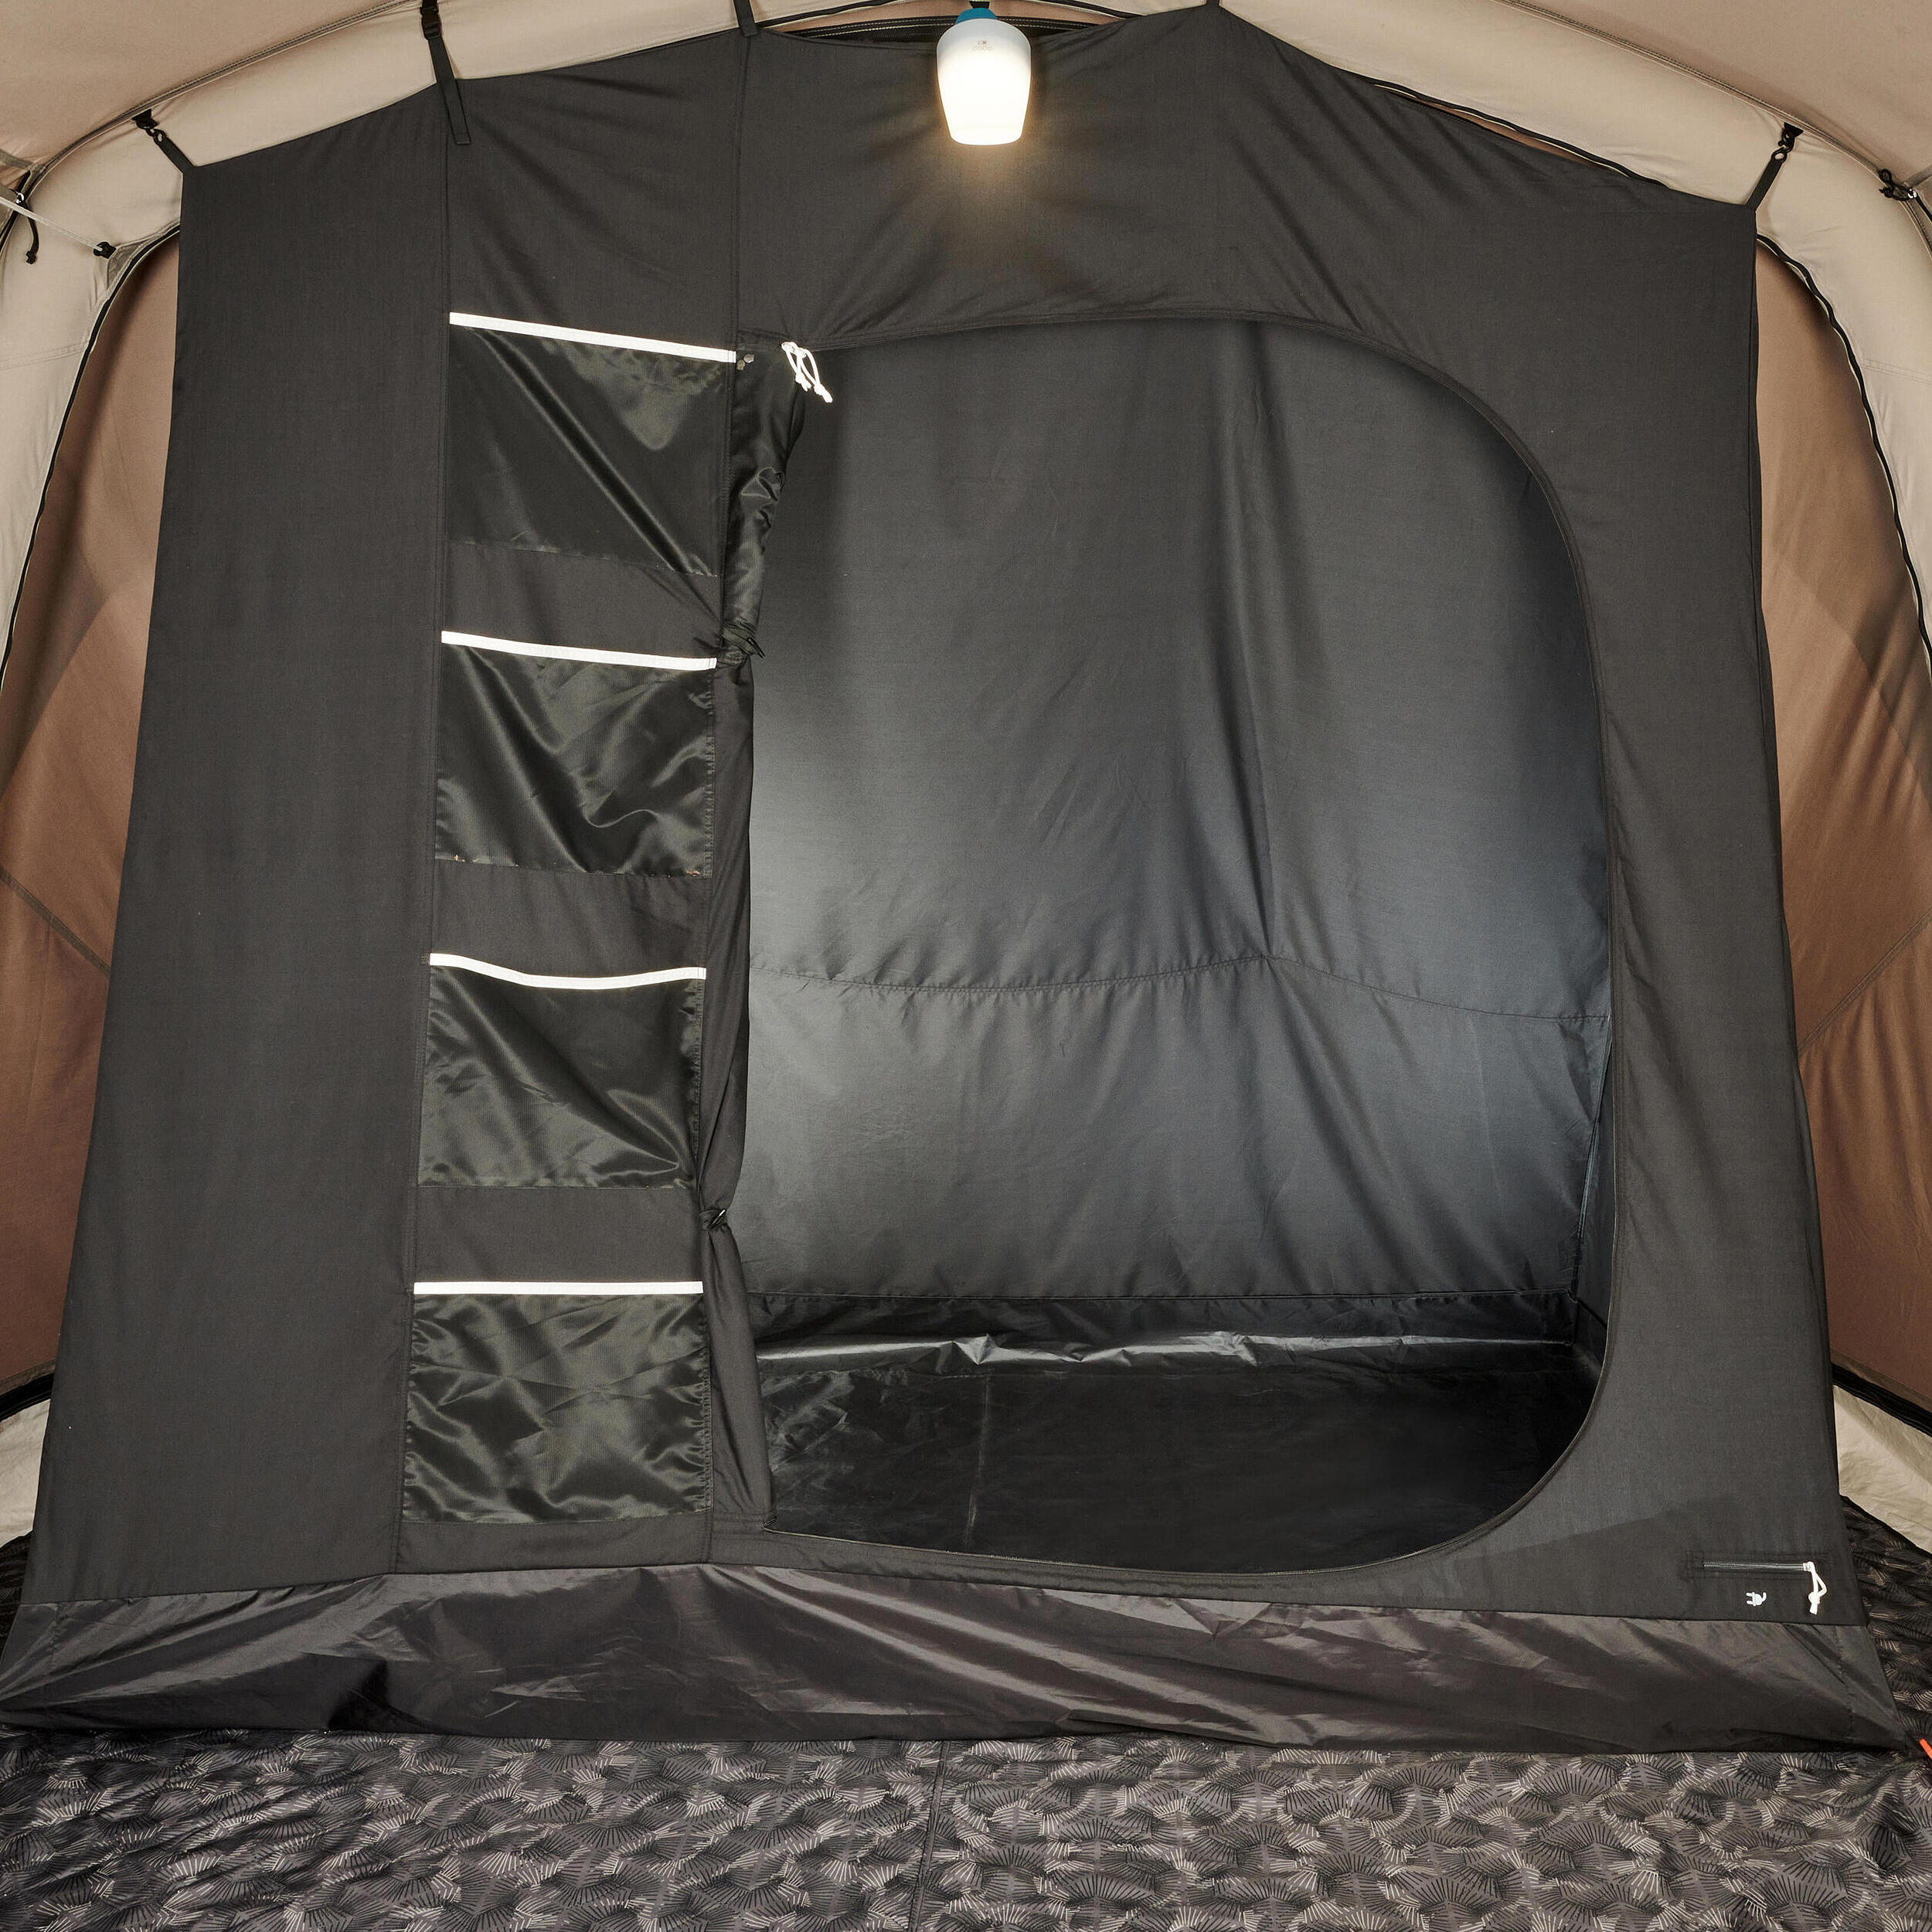 QUECHUA Extra Bedroom Air Seconds 6.3 Polycotton Tent Spare Part